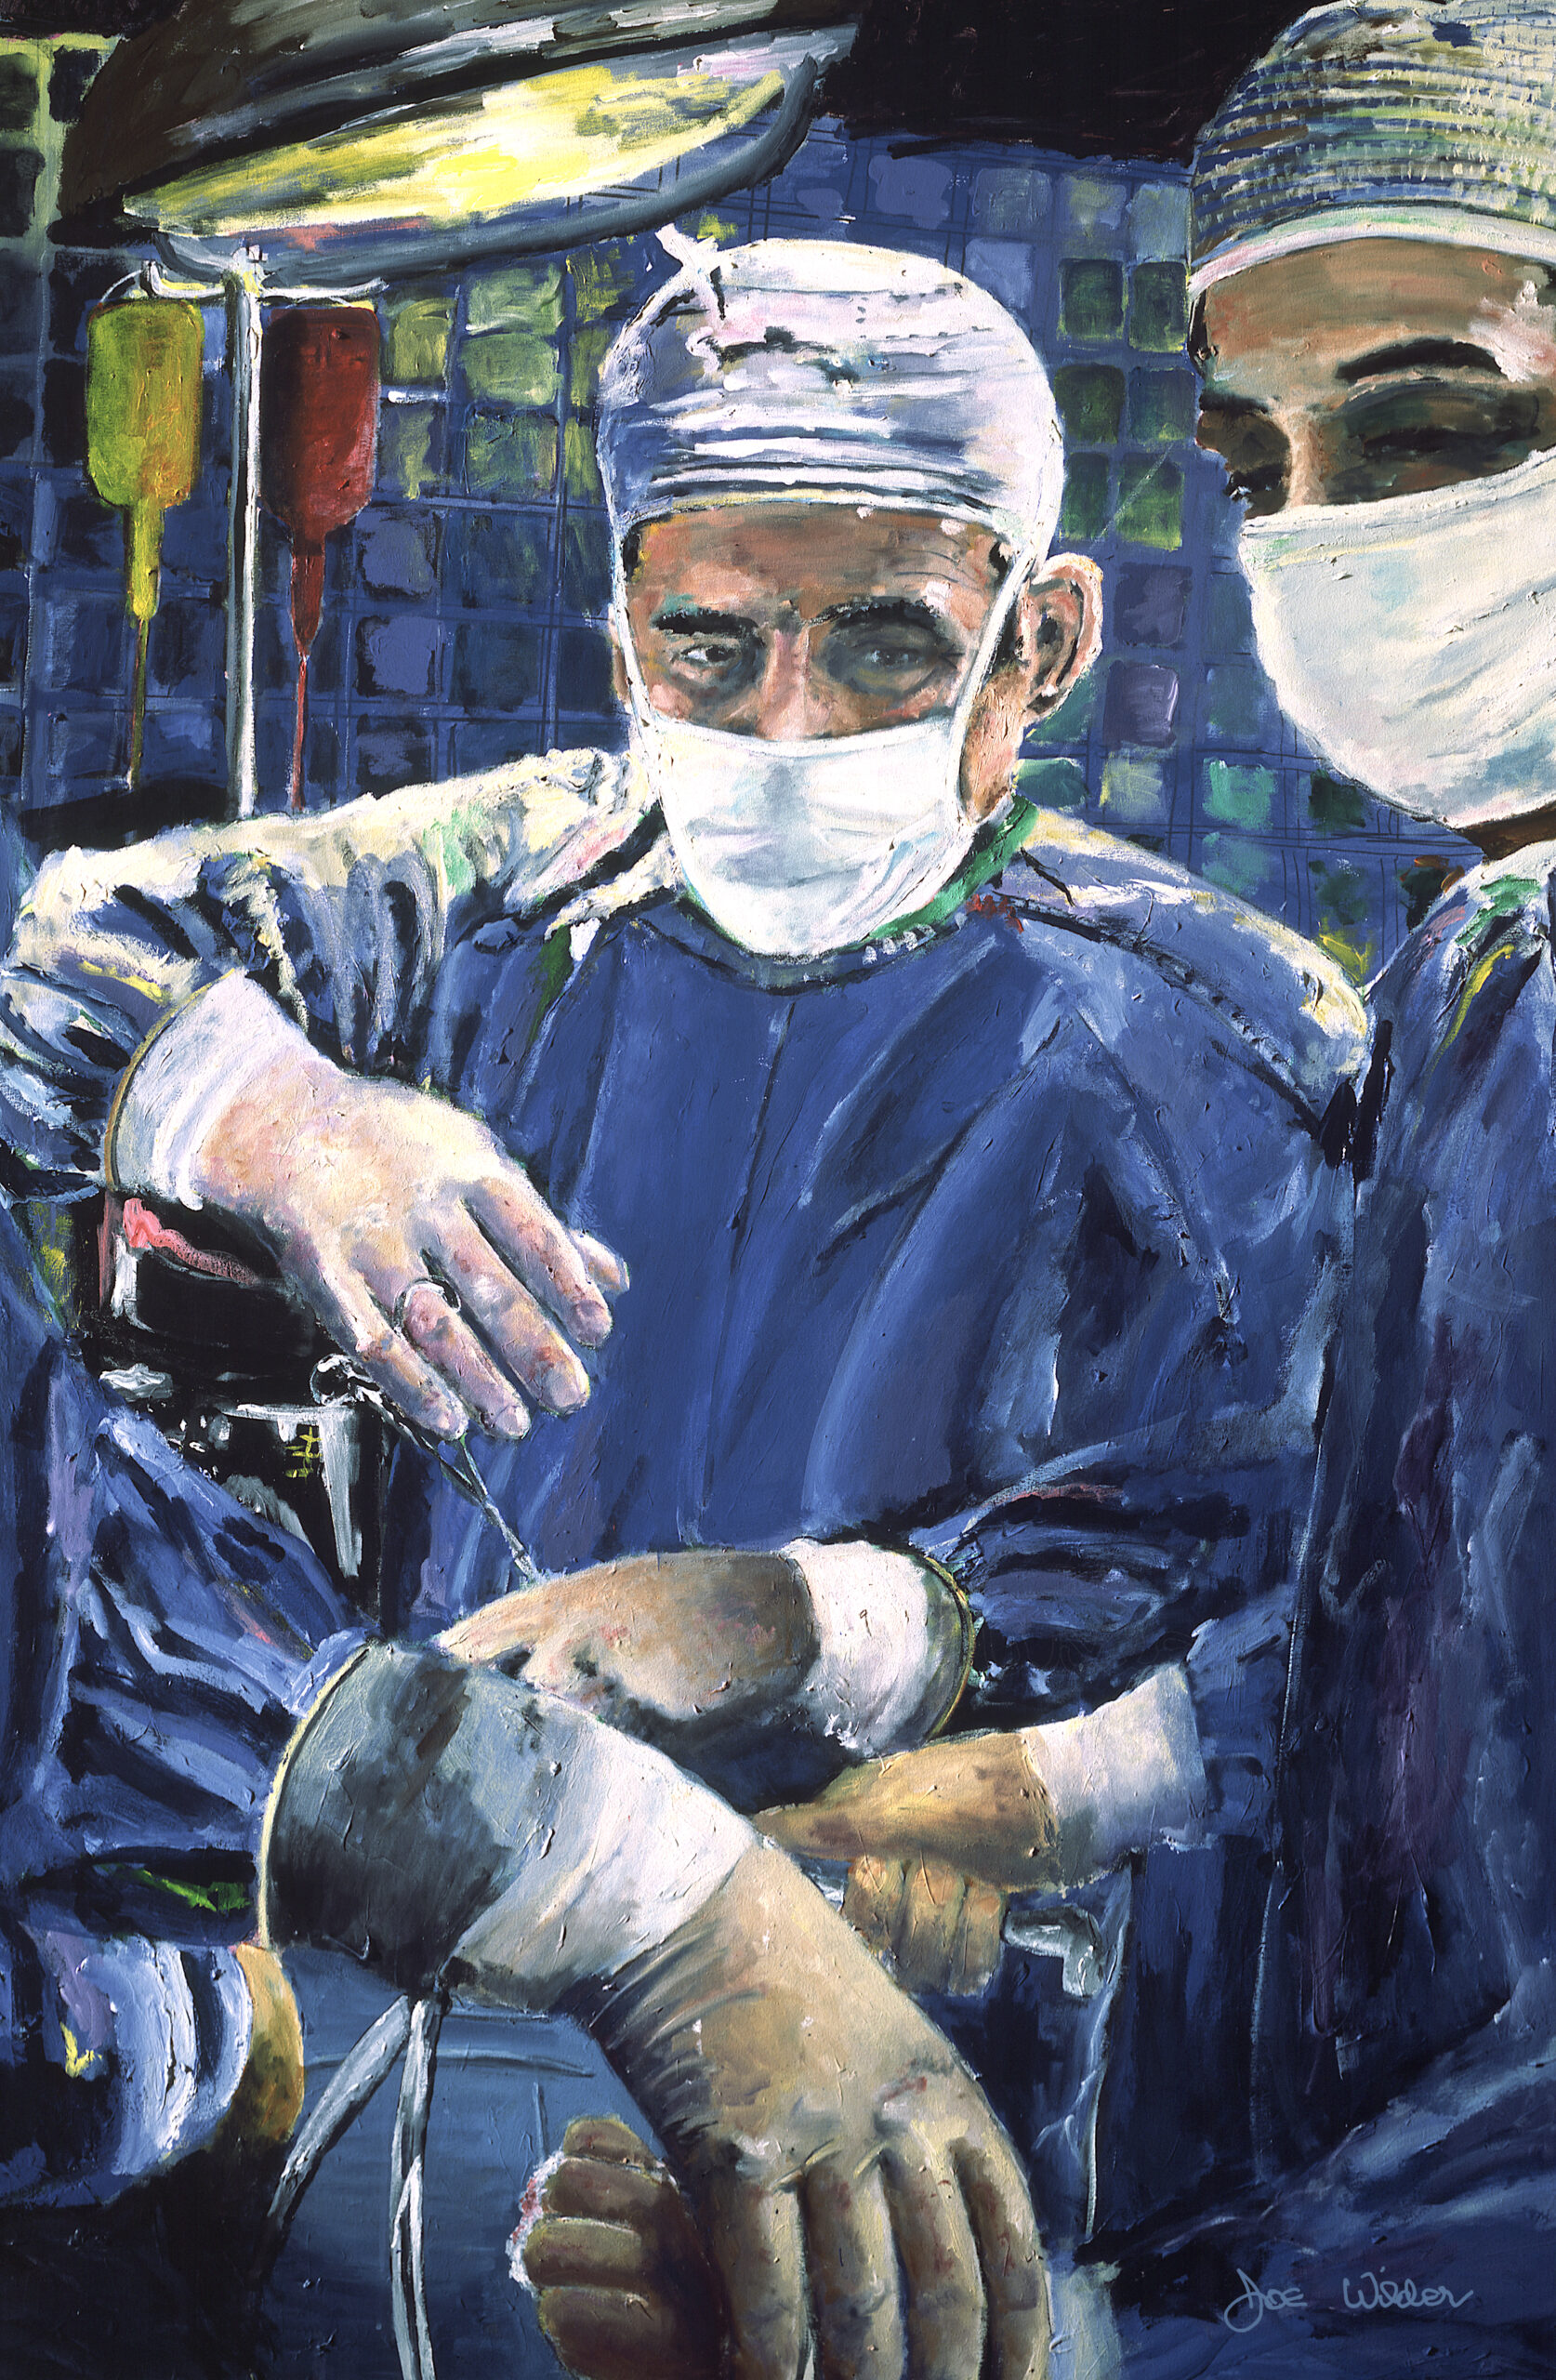 Art magic hands of surgeon performing surgery